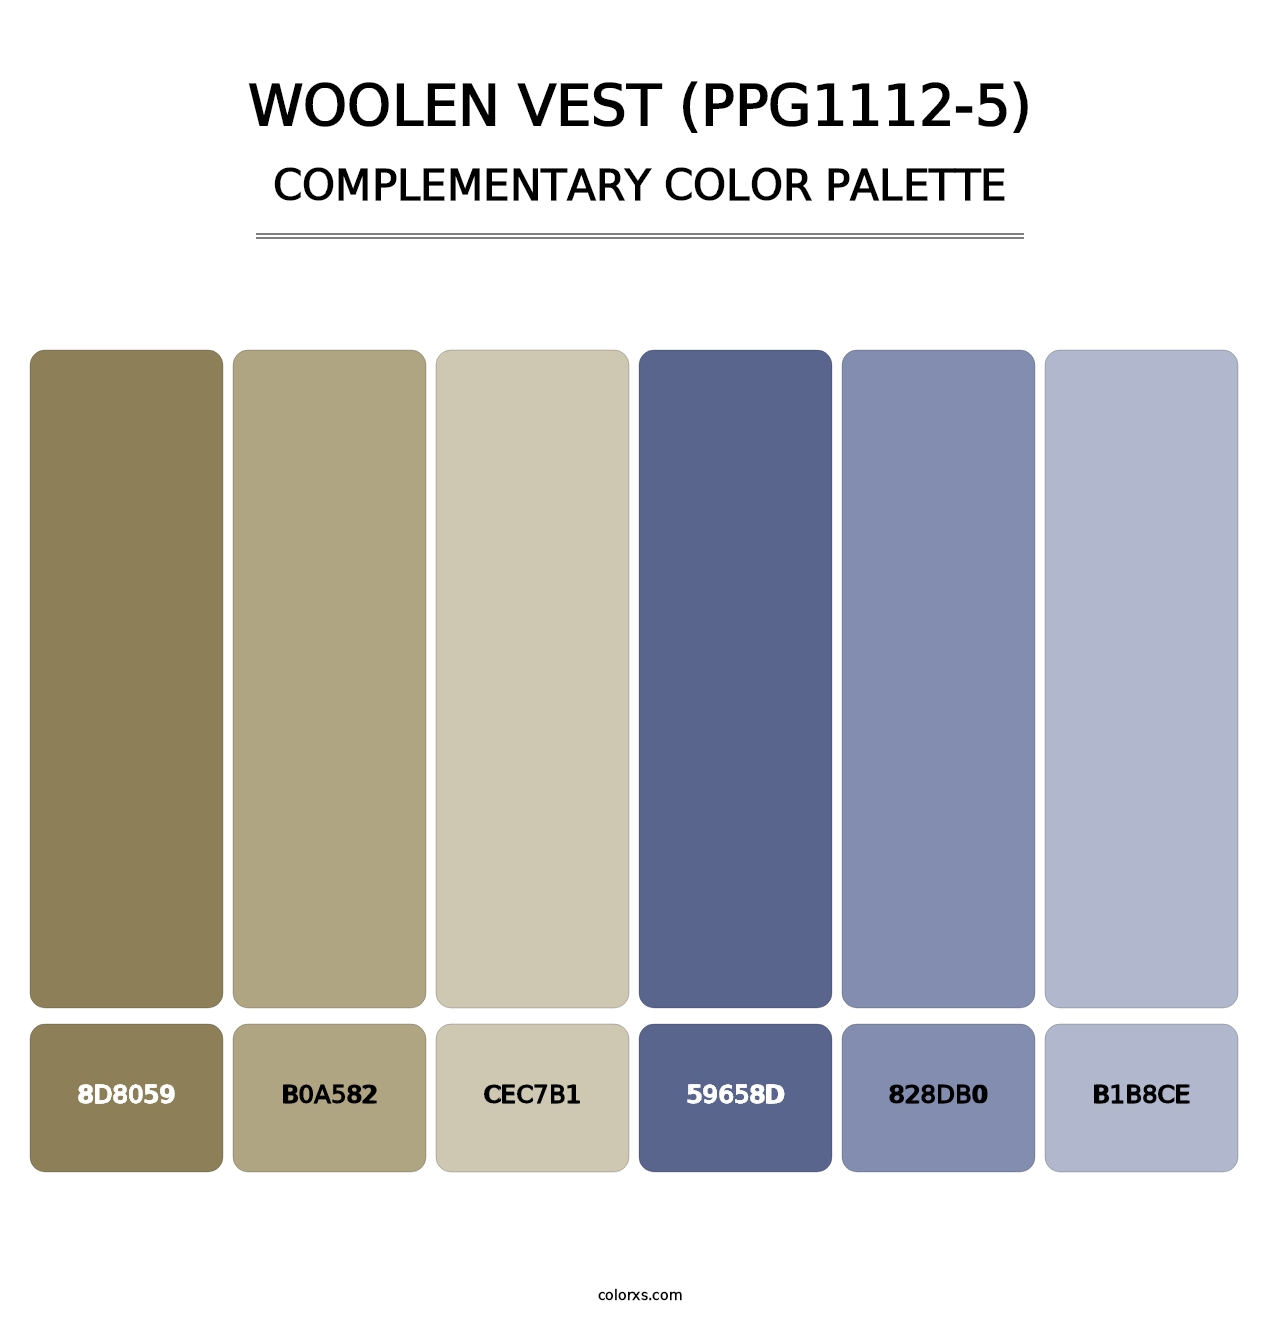 Woolen Vest (PPG1112-5) - Complementary Color Palette